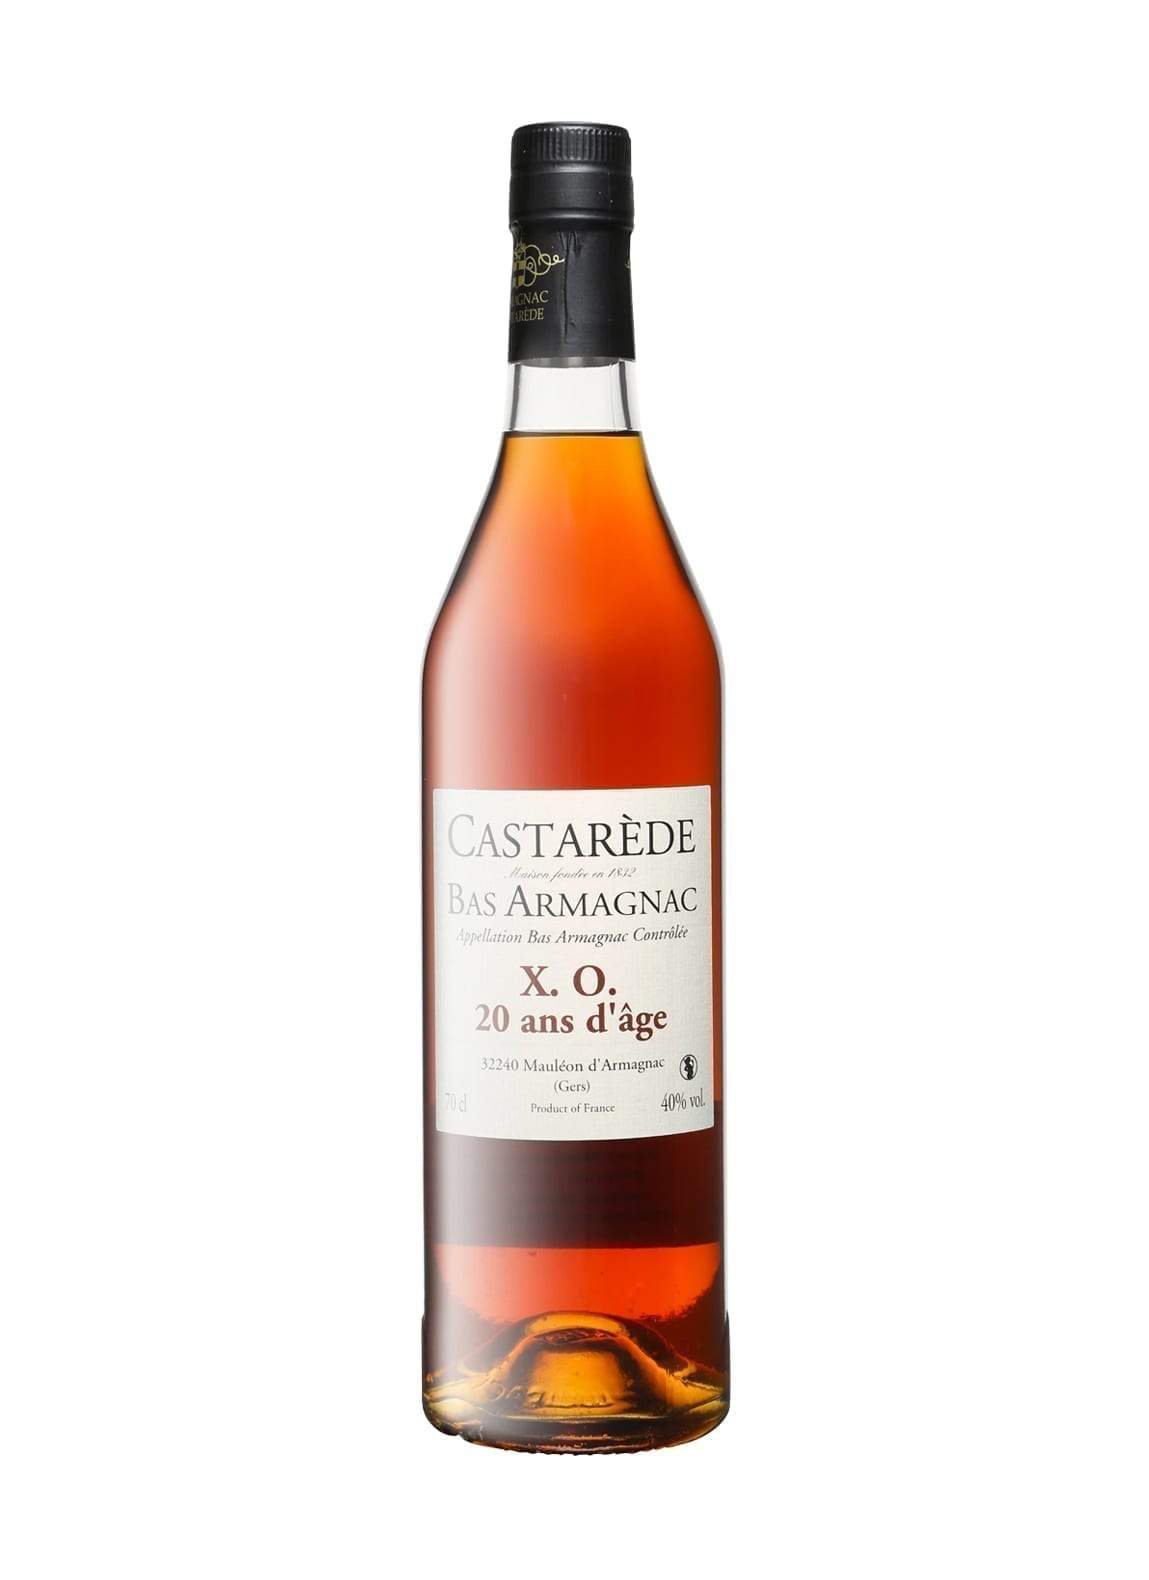 Castarede Bas Armagnac XO 20 years 40% 700ml | Brandy | Shop online at Spirits of France